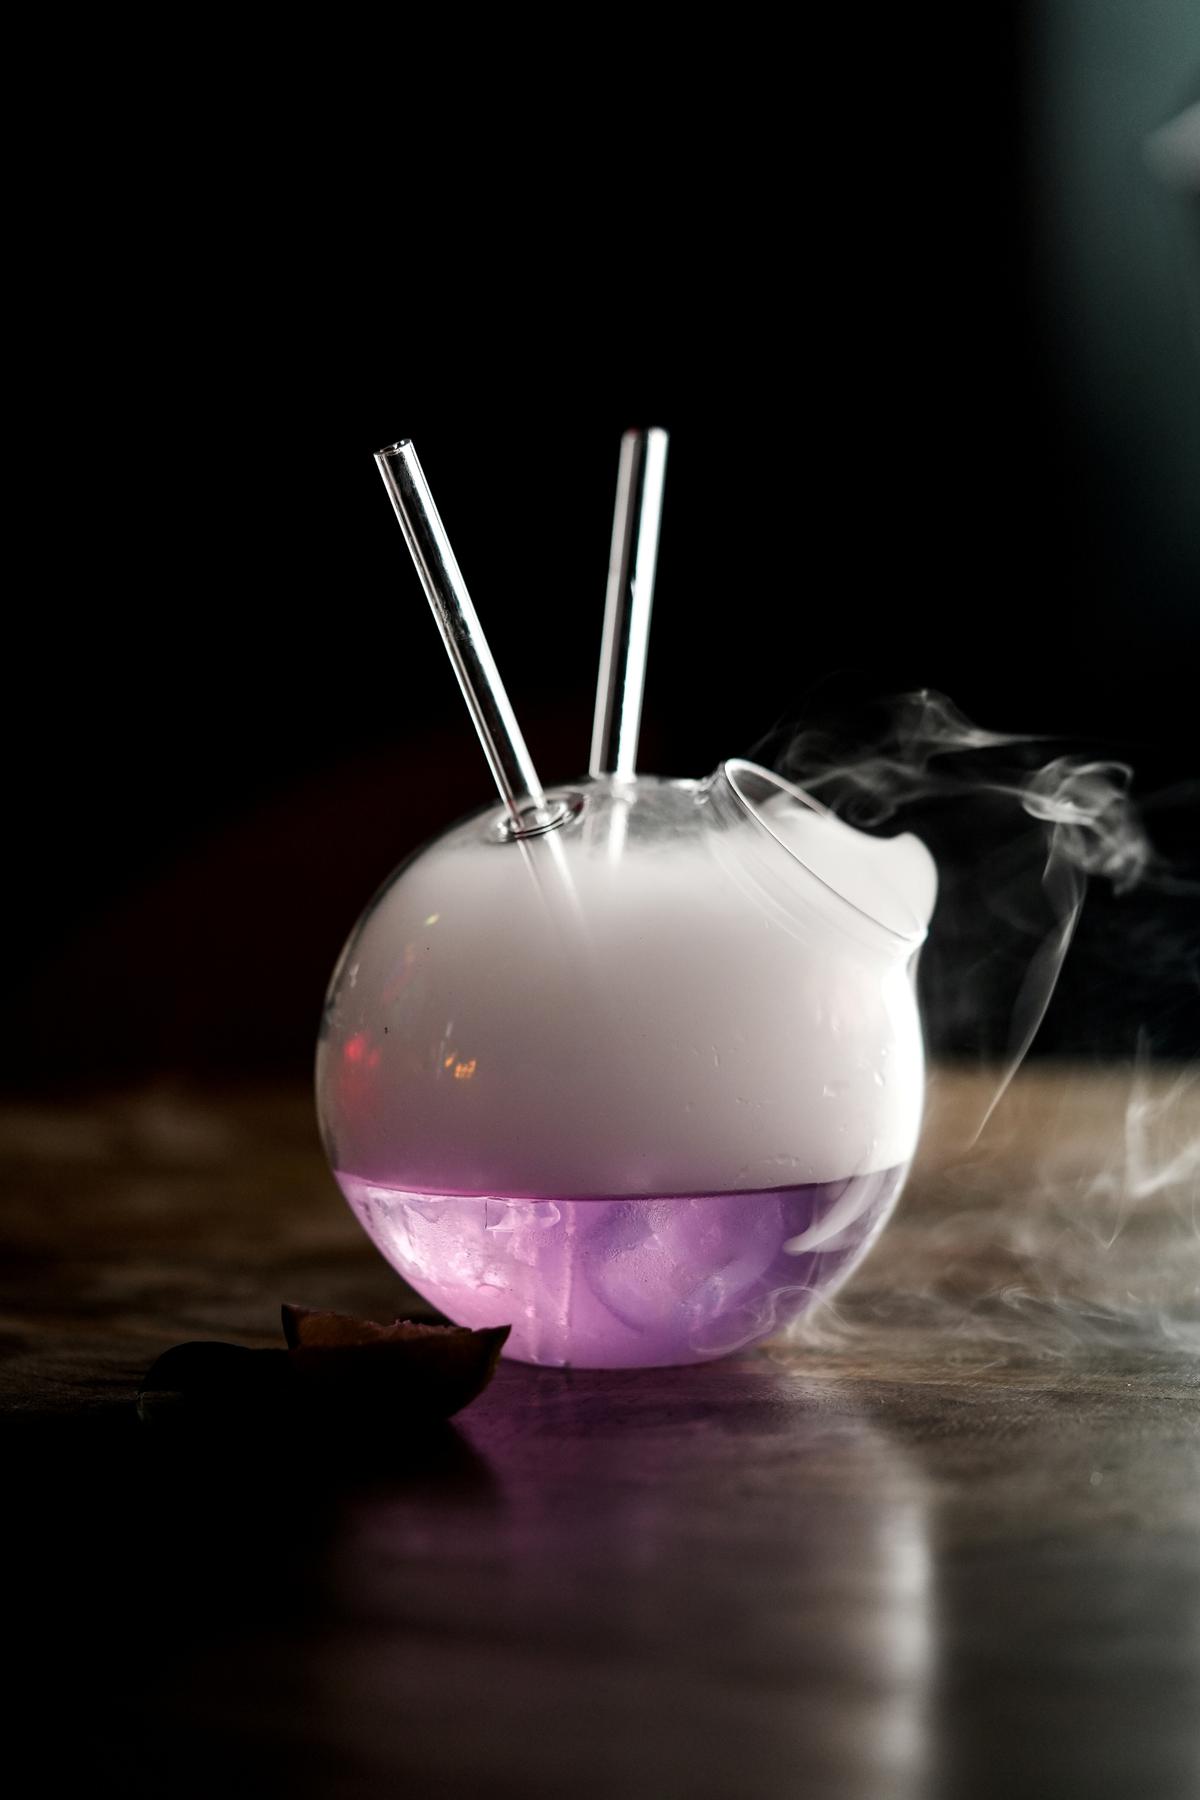 The purple chameleon cocktail